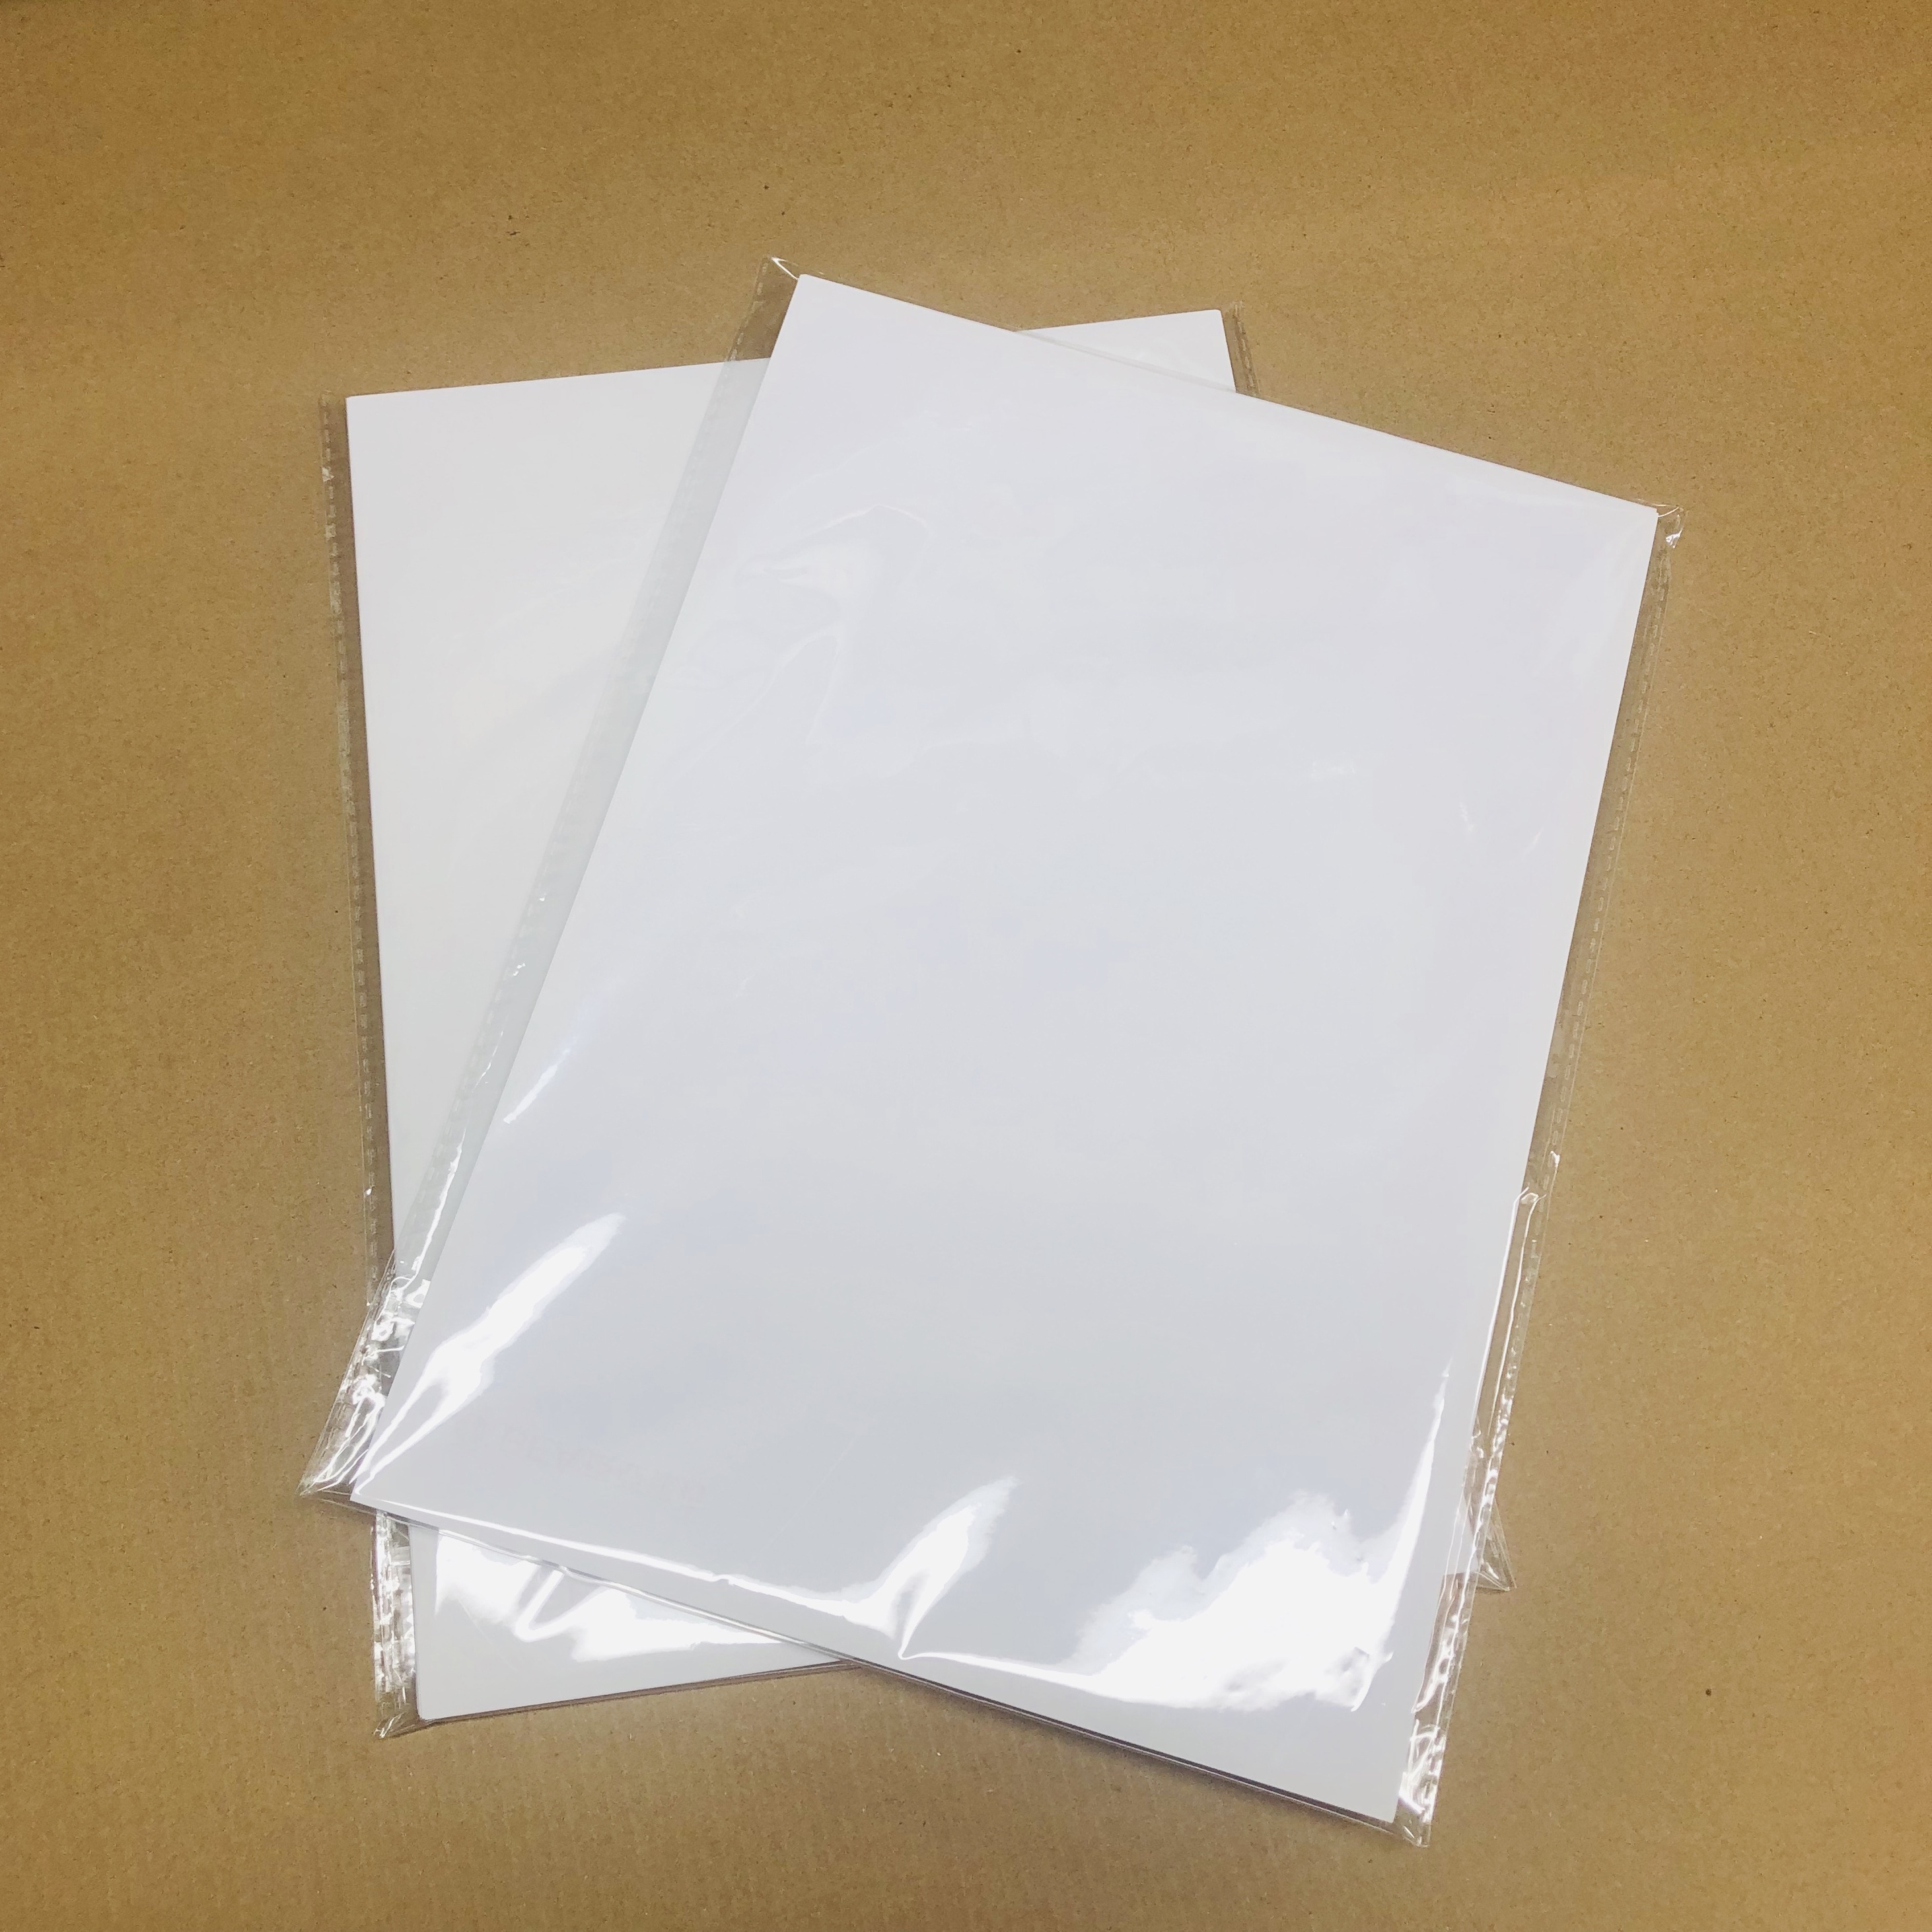 Mr. Pen- Kraft Paper Sheets, 50 Pack, 8.5 x 11, Kraft Paper, Brown Craft  Paper, Craft Paper Sheets, Brown Printer Paper, Kraft Stationary Paper